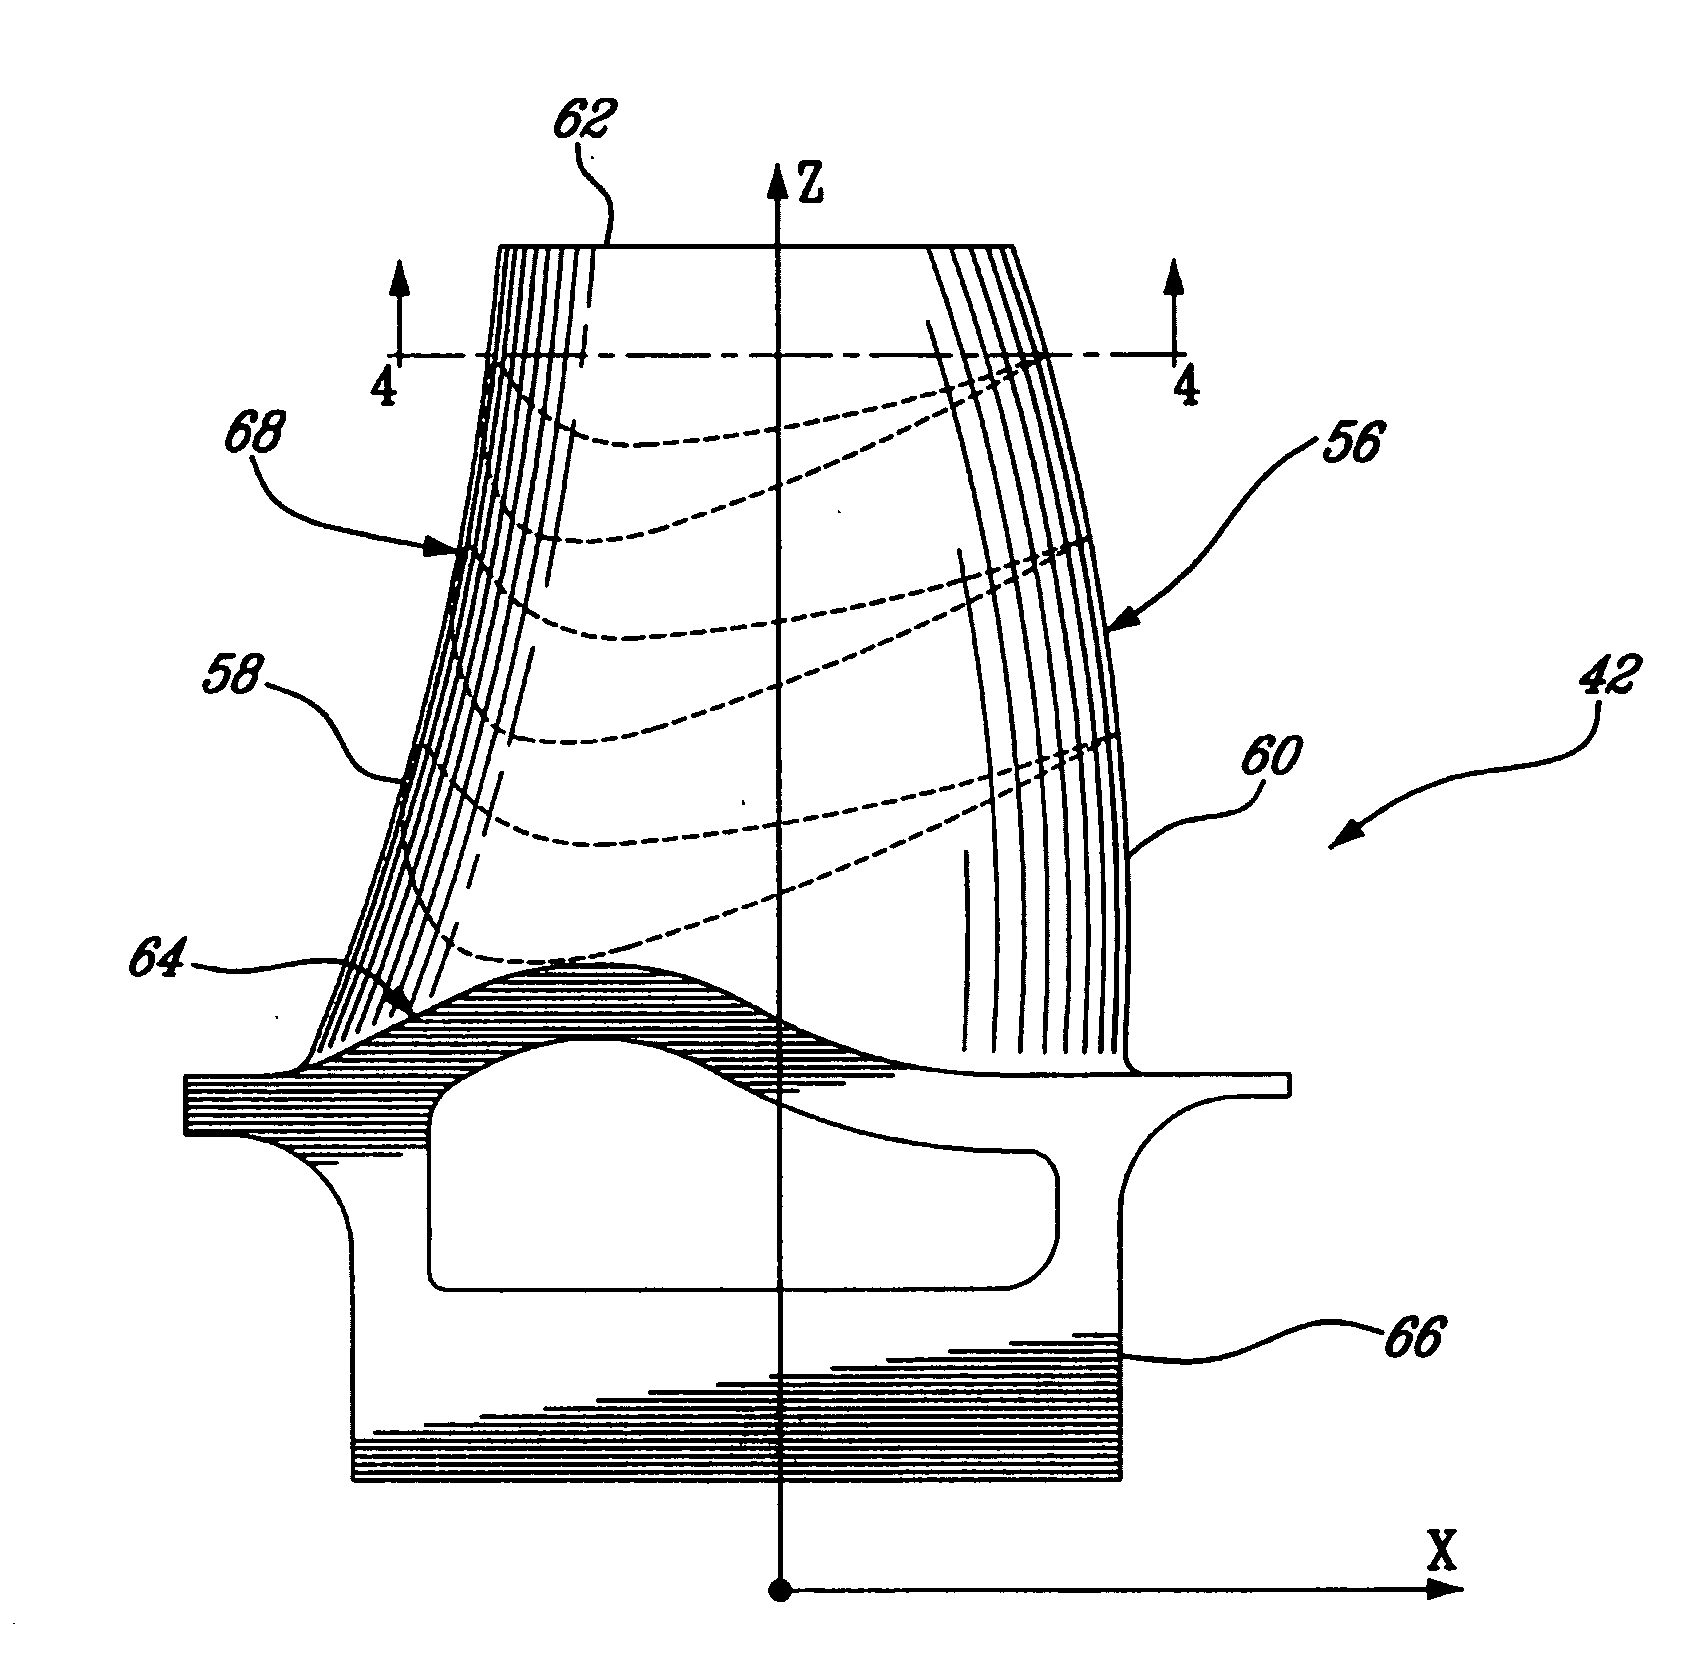 HP turbine blade airfoil profile